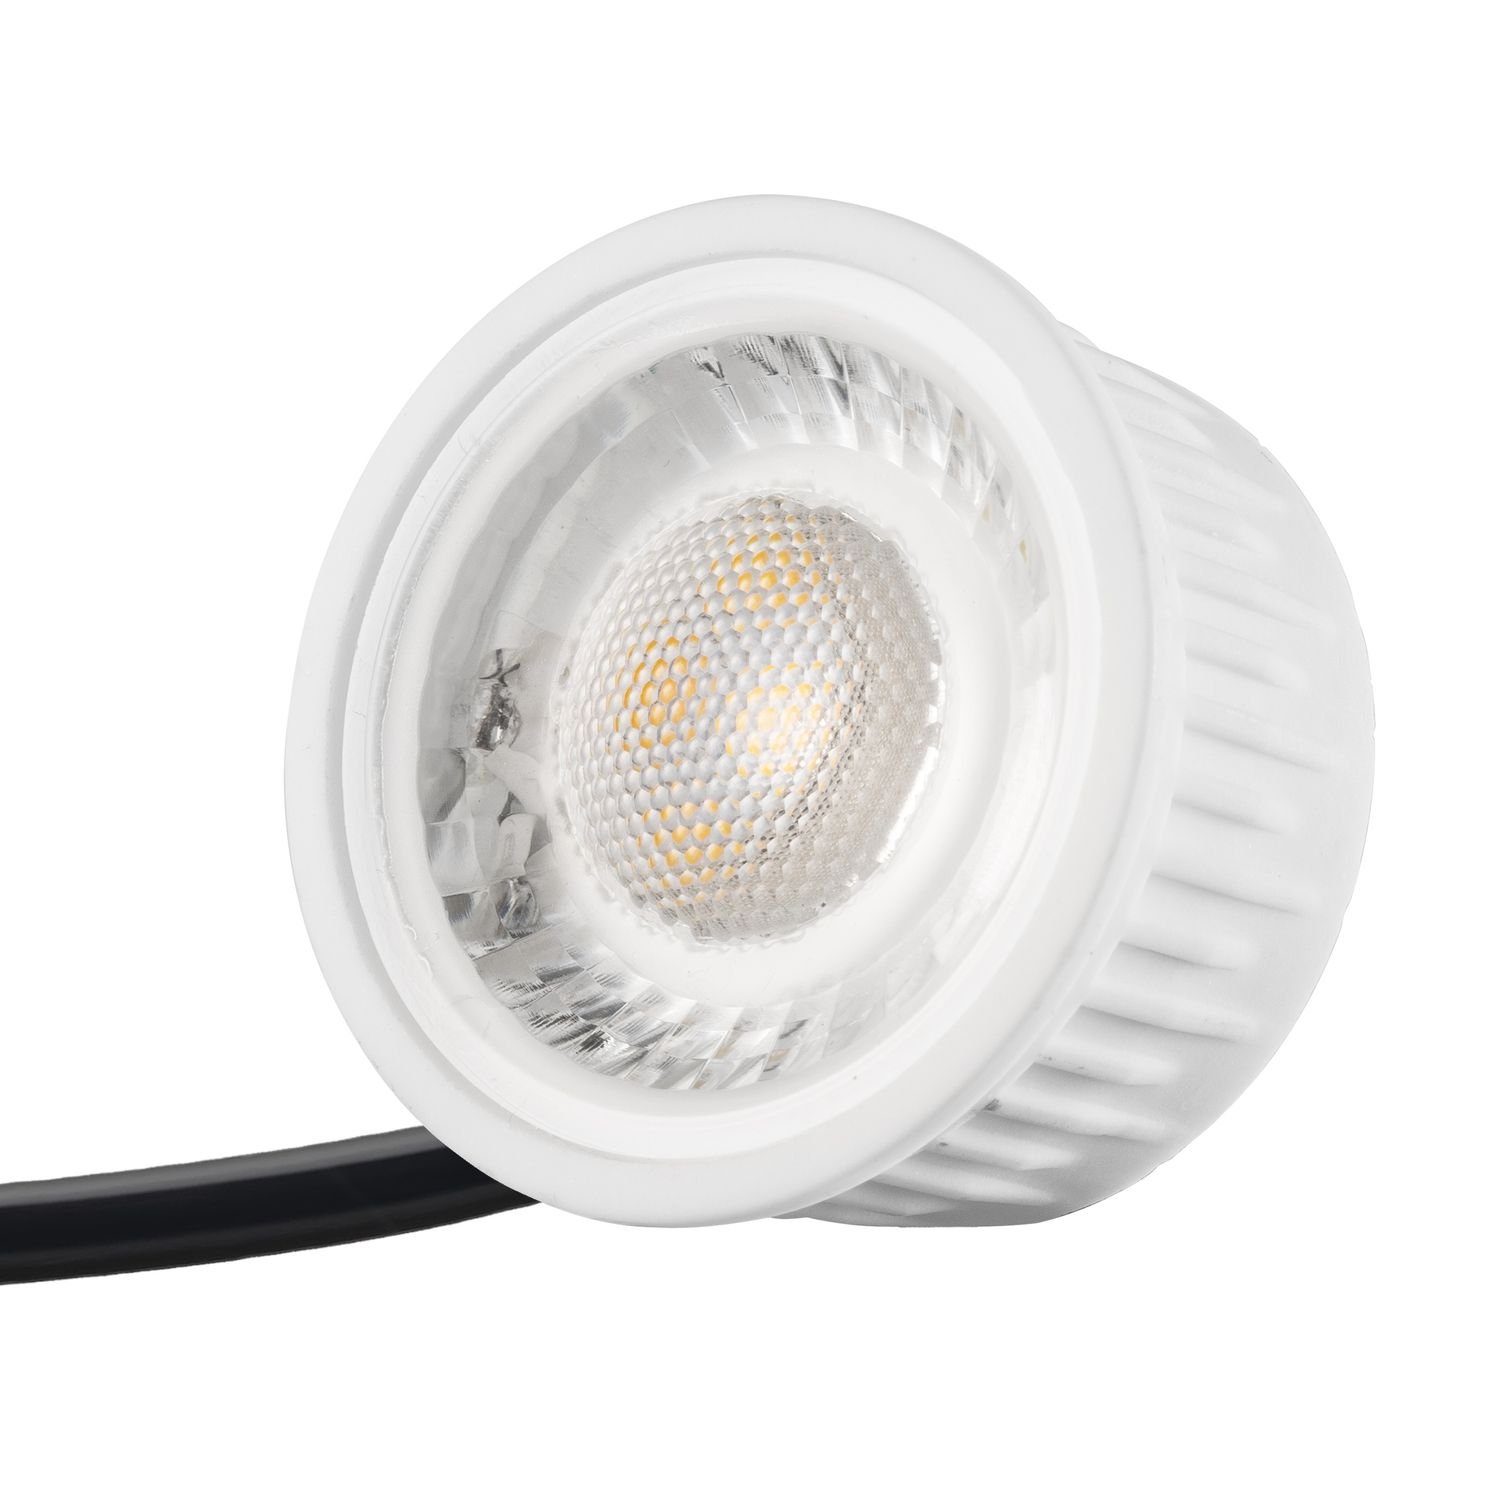 LEDANDO LED Einbaustrahler mit 5W flach IP44 extra Set Einbaustrahler 3er LED Leuchtmitte weiß in